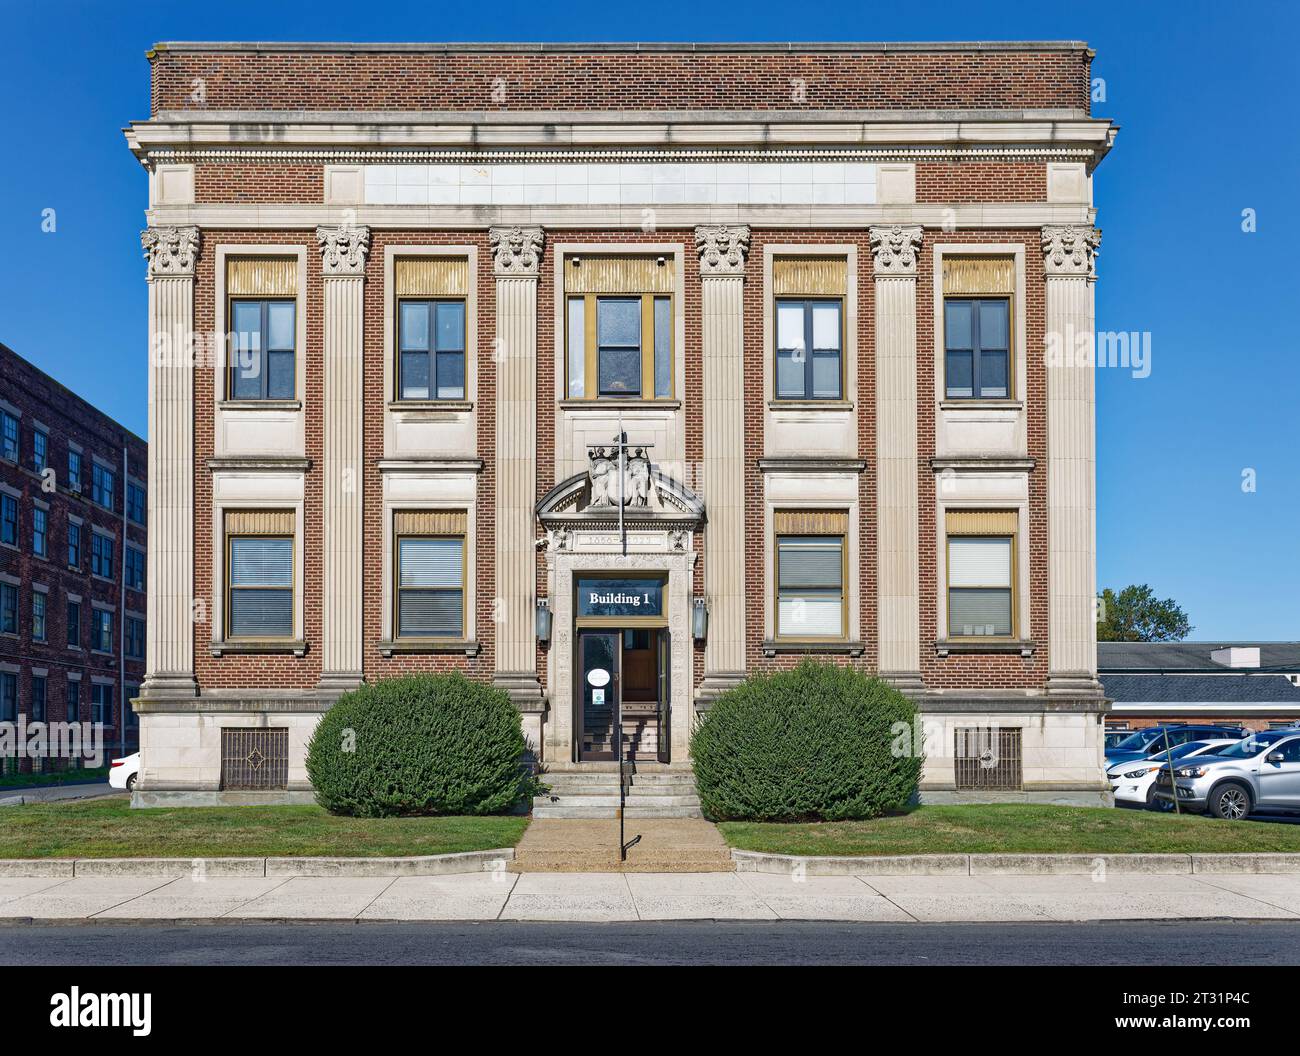 Ewing and Carroll, Trenton: Catholic Charitys Building 1 ist ein Bürogebäude aus Backsteinen im Ewing/Carroll Historic District. Stockfoto